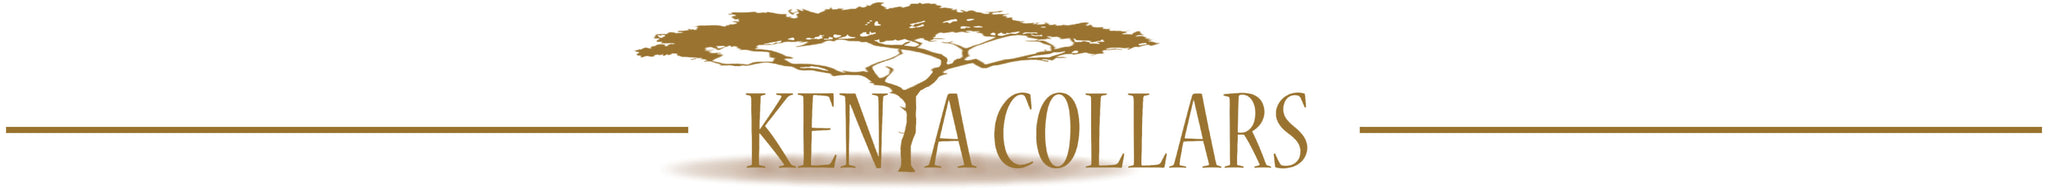 Kenya Collars Logo for Page Header